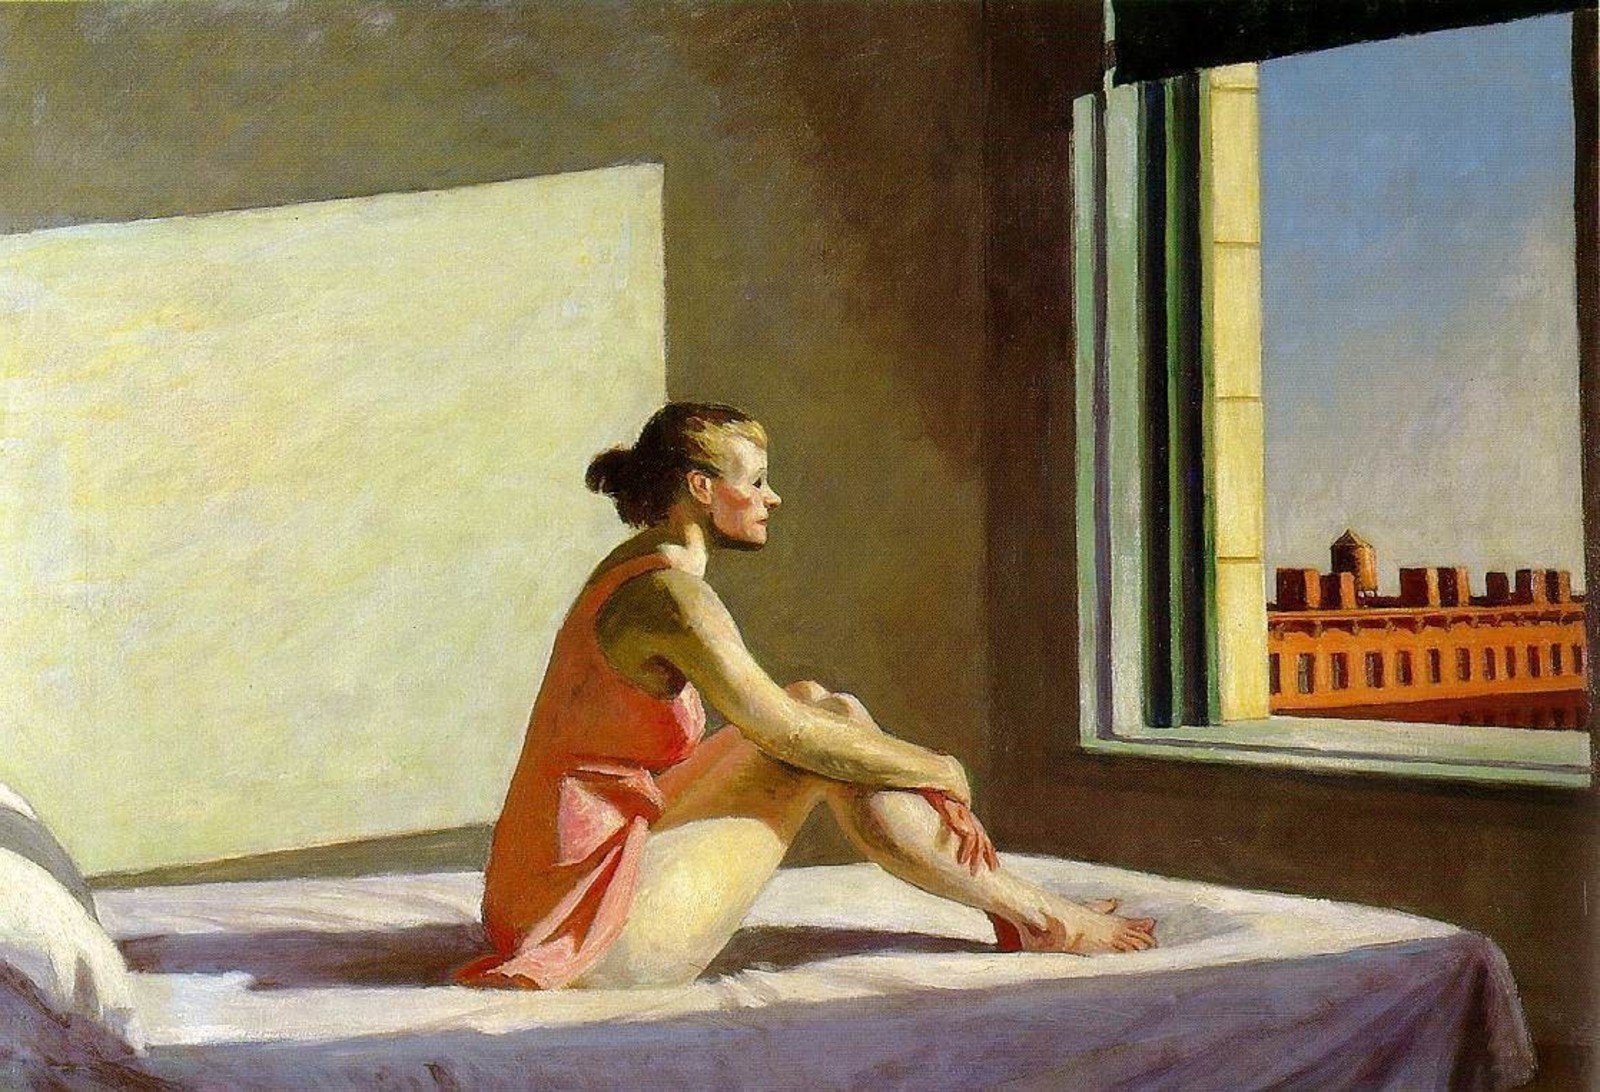 Edward Hopper. Morning Sun. 1952. Oil on canvas. 102 x 71.5 cm. Columbus Museum of Art